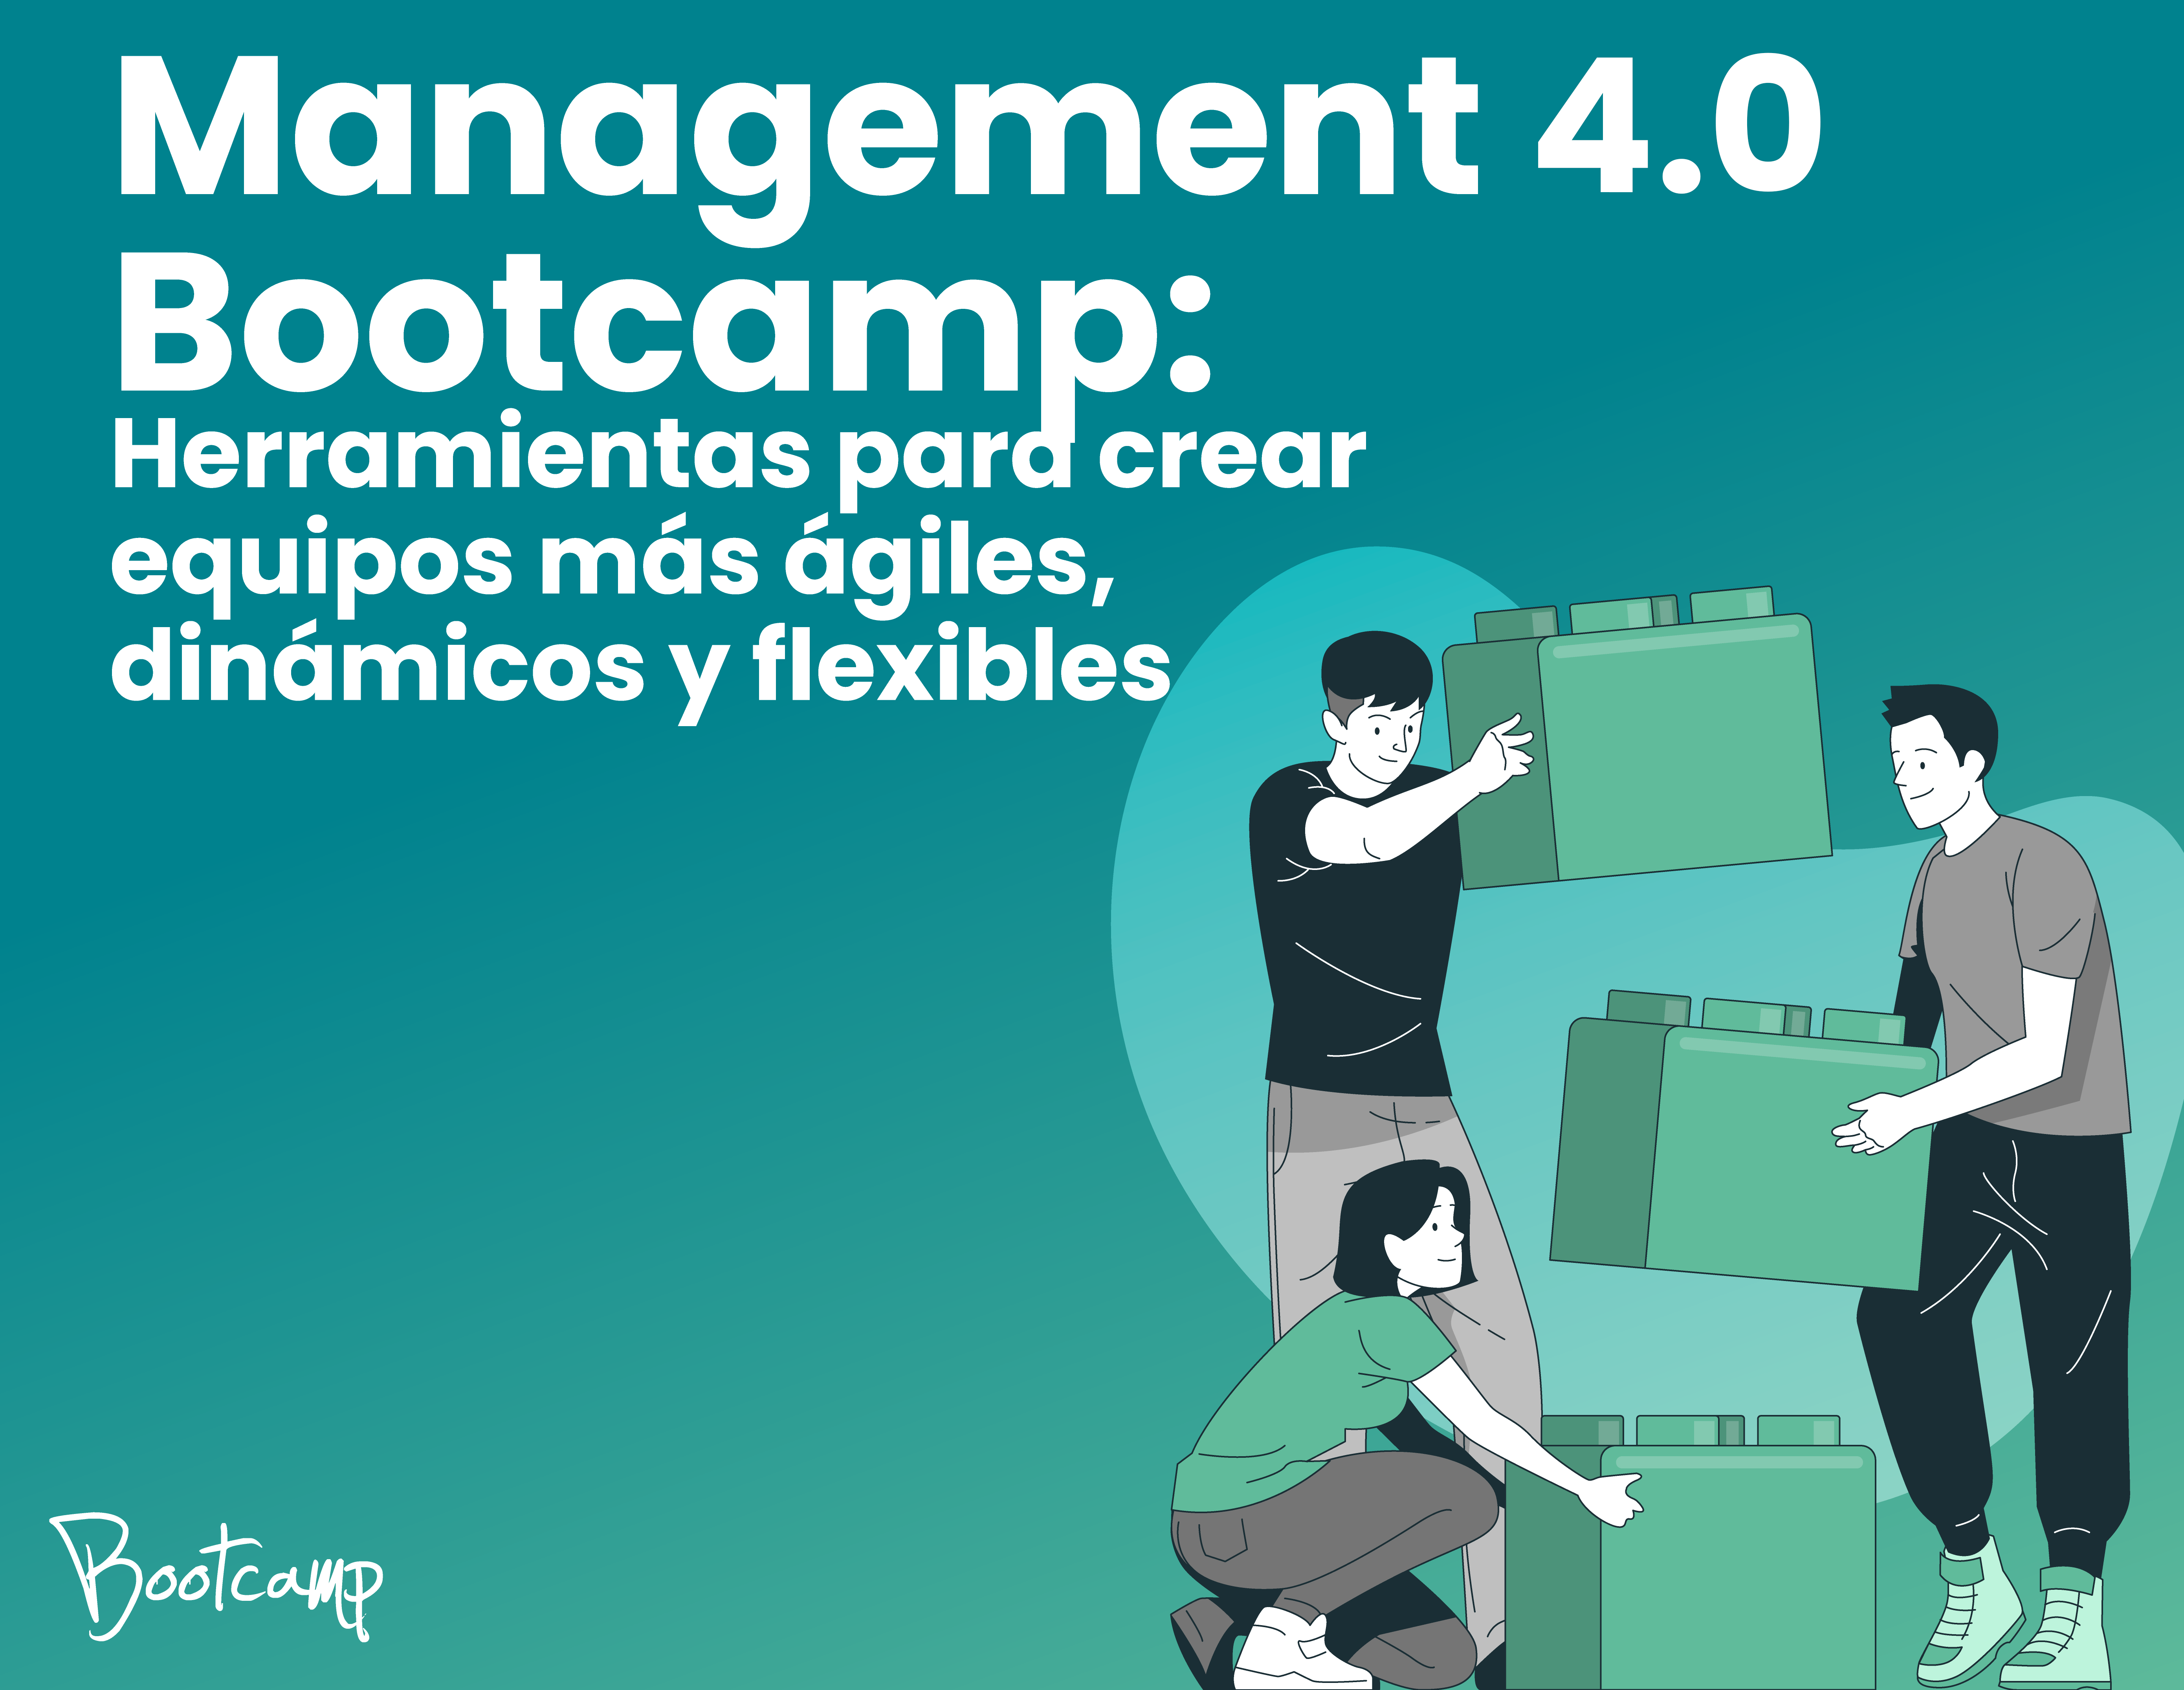 Management 4.0 Bootcamp